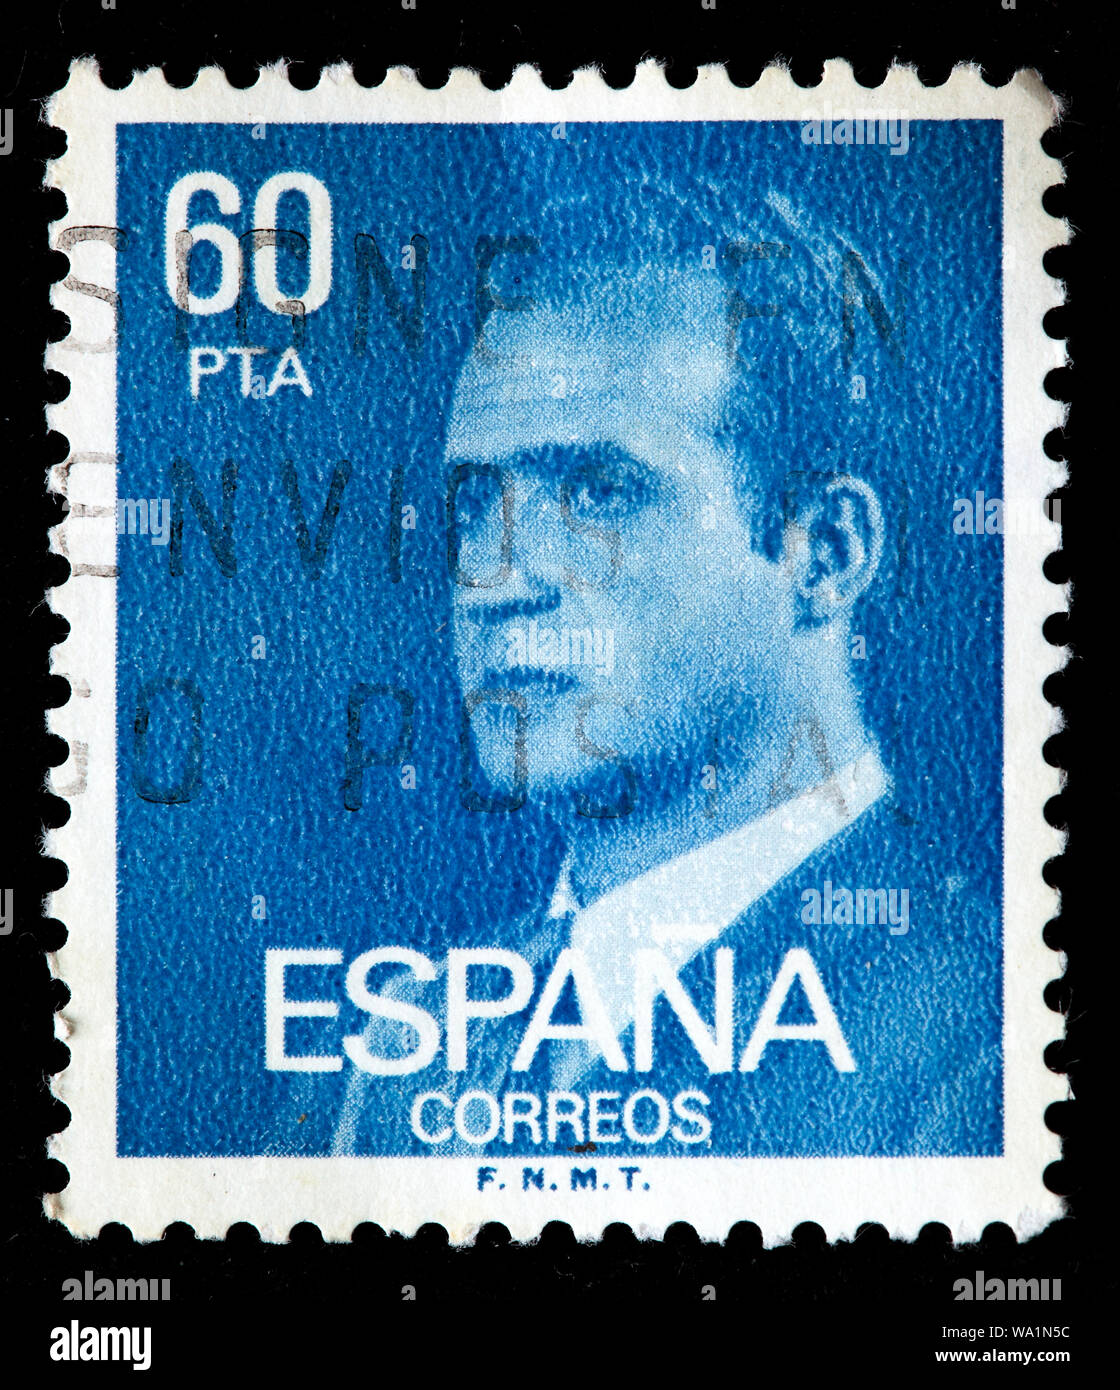 Juan Carlos I, King of Spain, postage stamp, Spain, 1981 Stock Photo